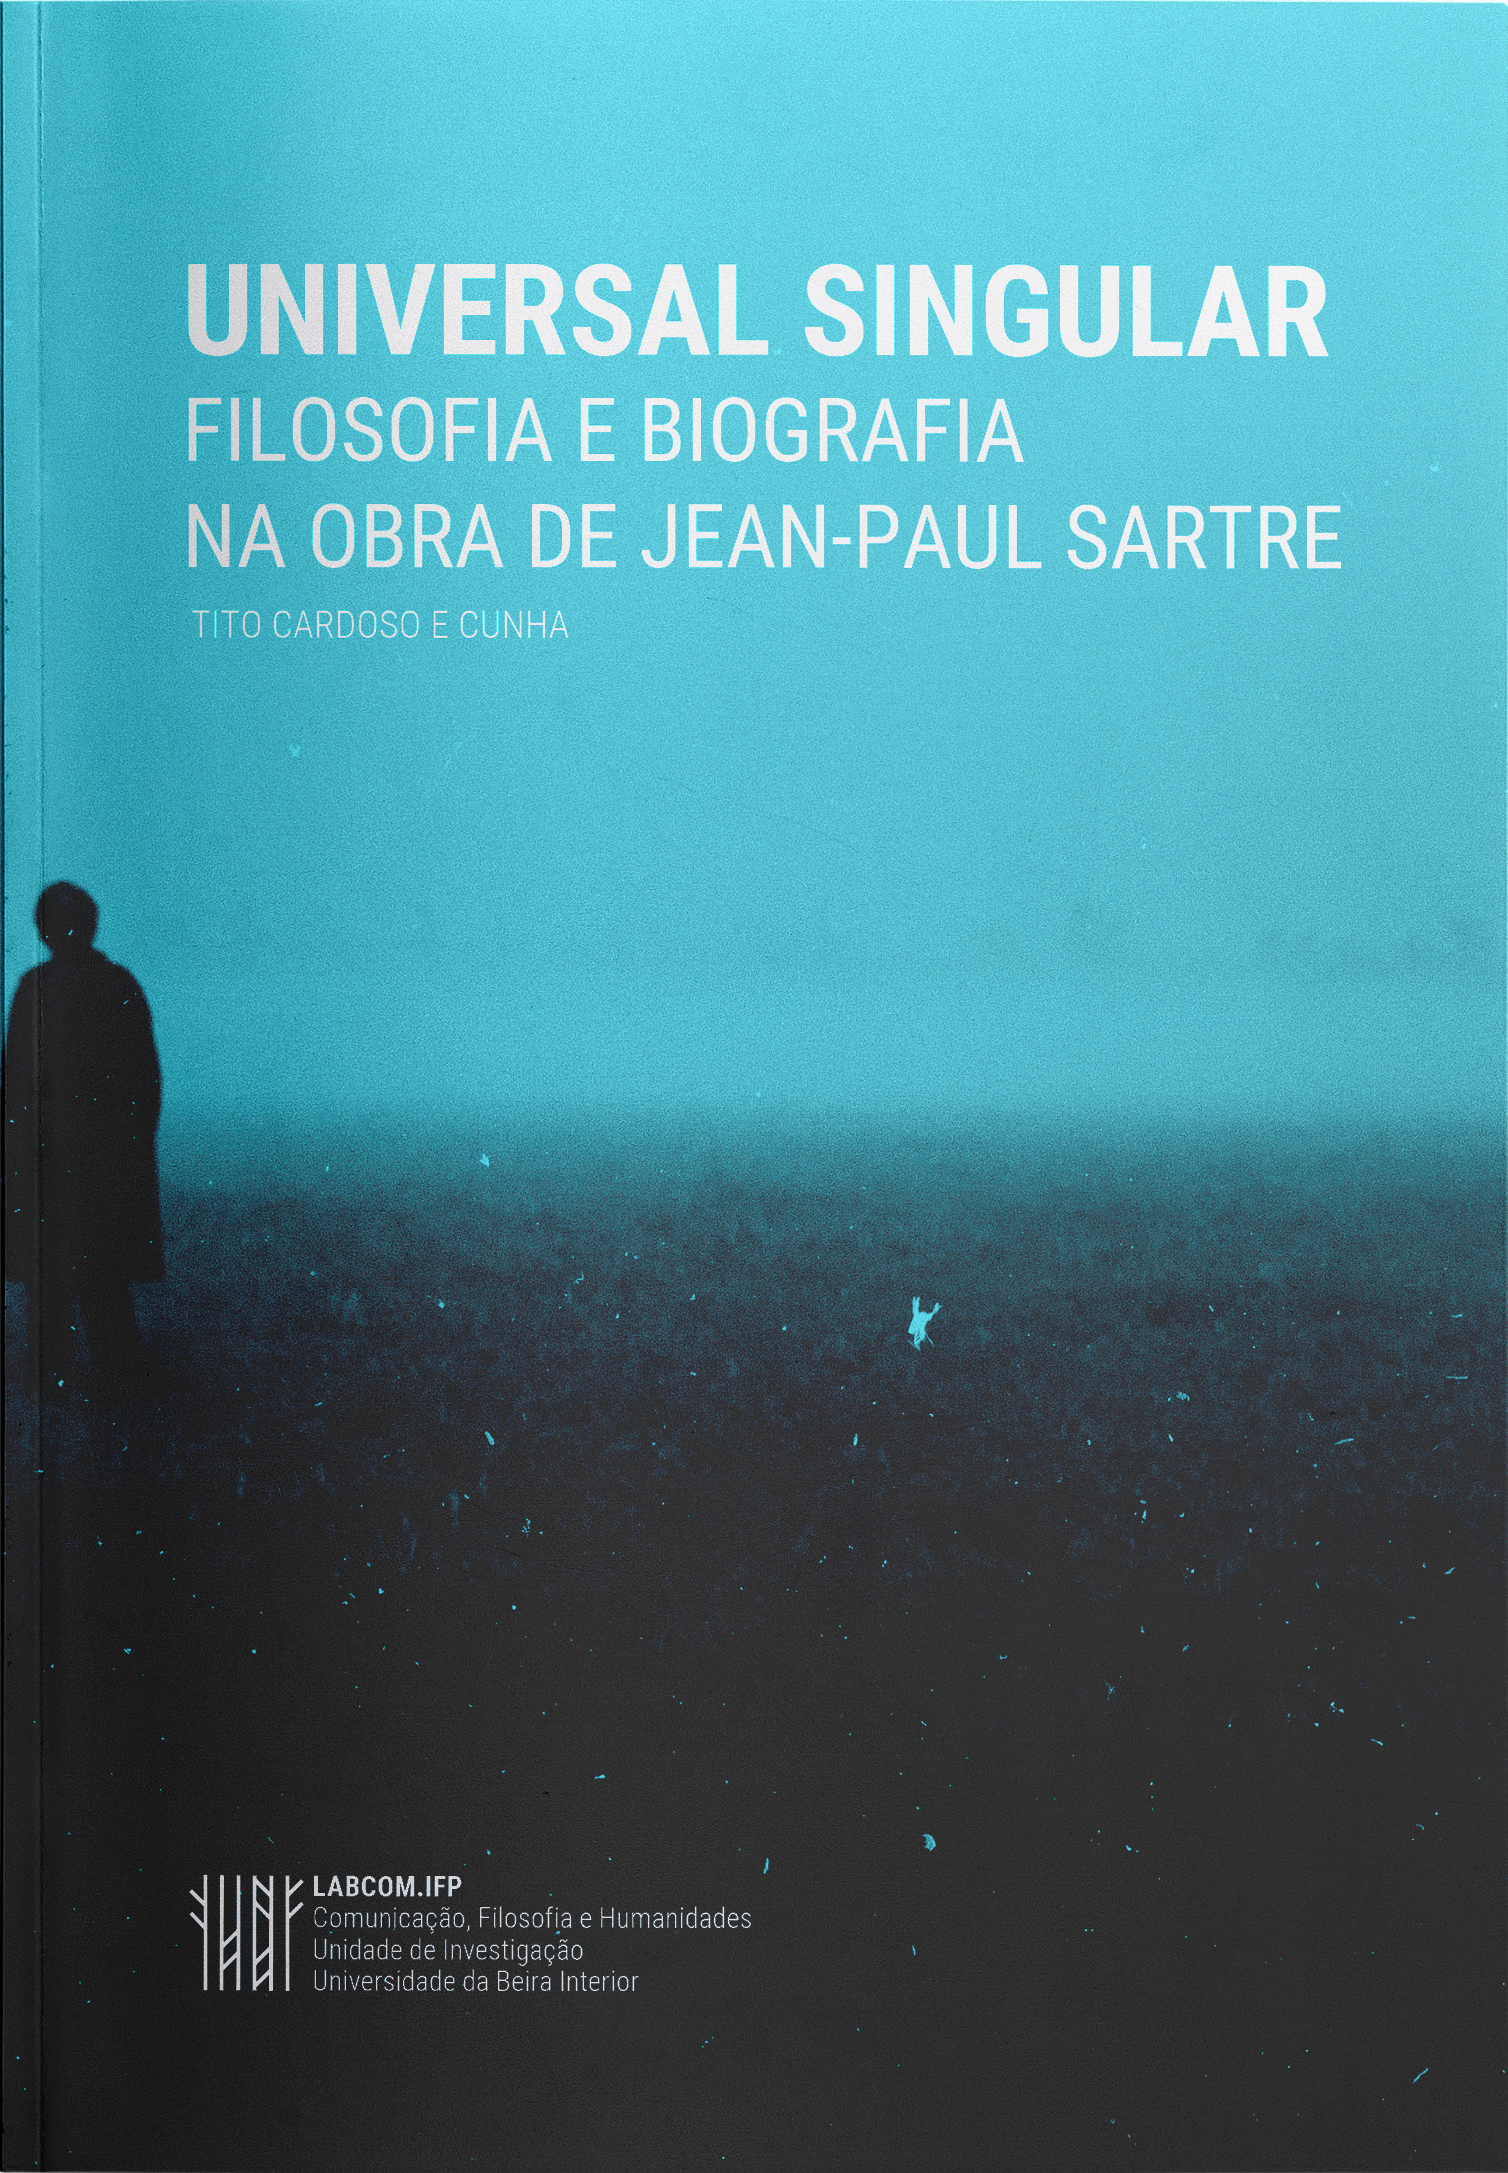 Capa: Tito Cardoso e Cunha  (2019) Universal Singular - Filosofia e biografia na obra de Jean-Paul Sartre. Communication  +  Philosophy  +  Humanities. .